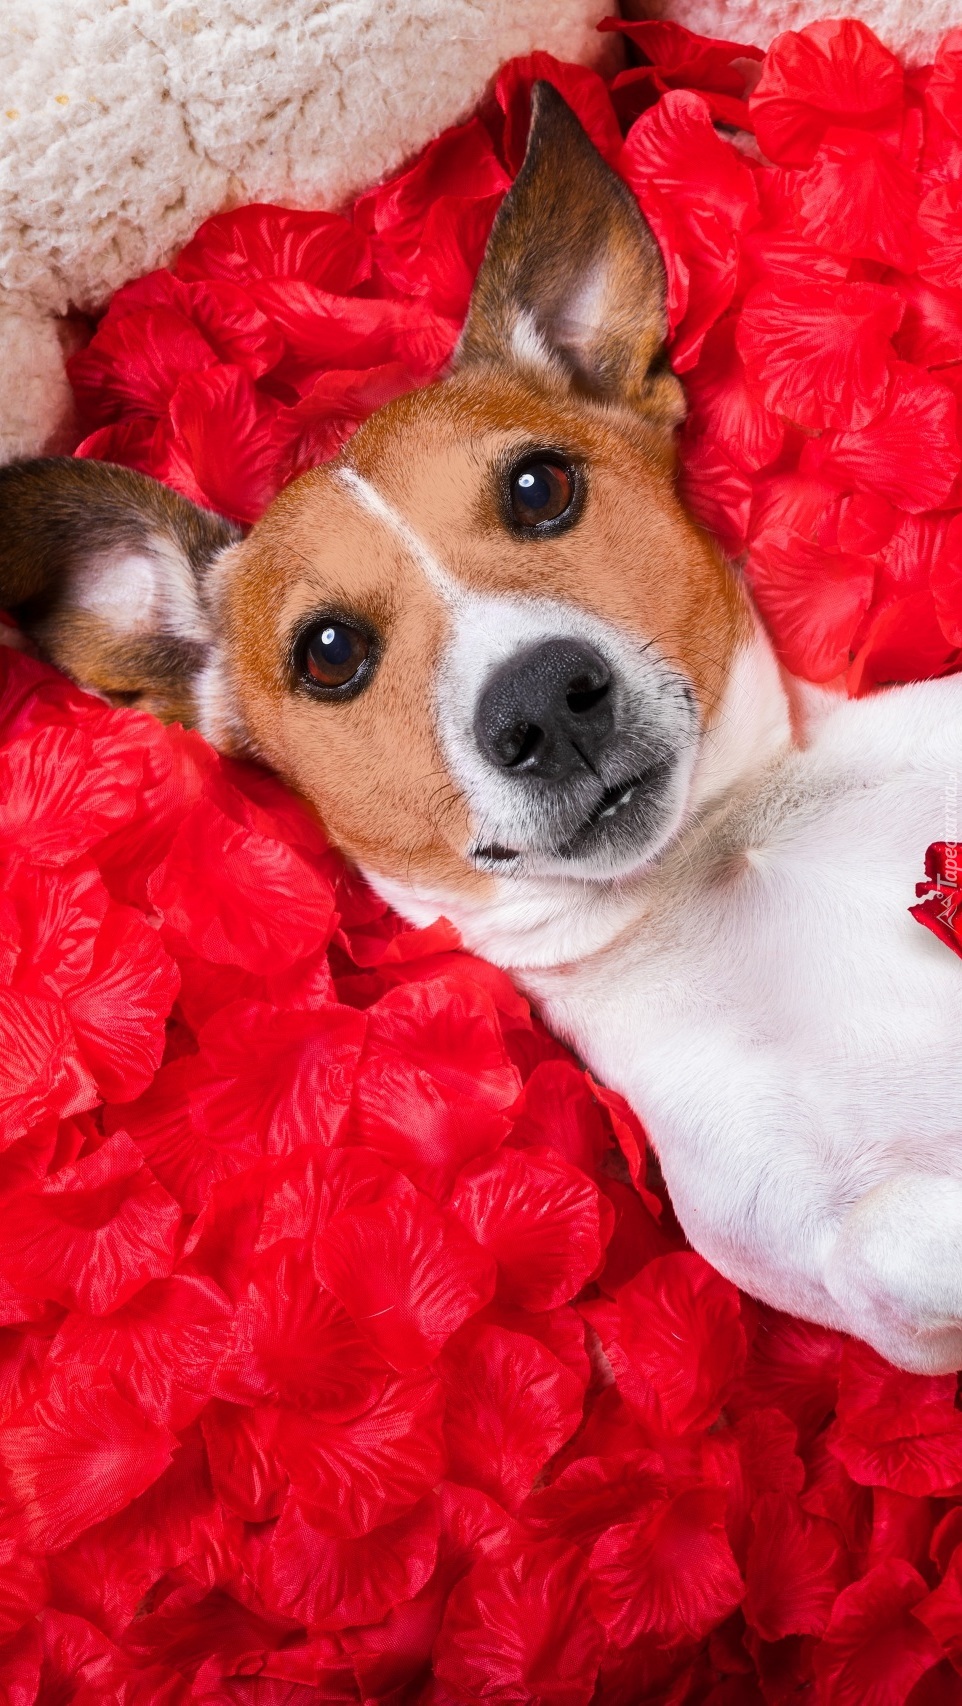 Jack Russell terrier  na płatkach róż